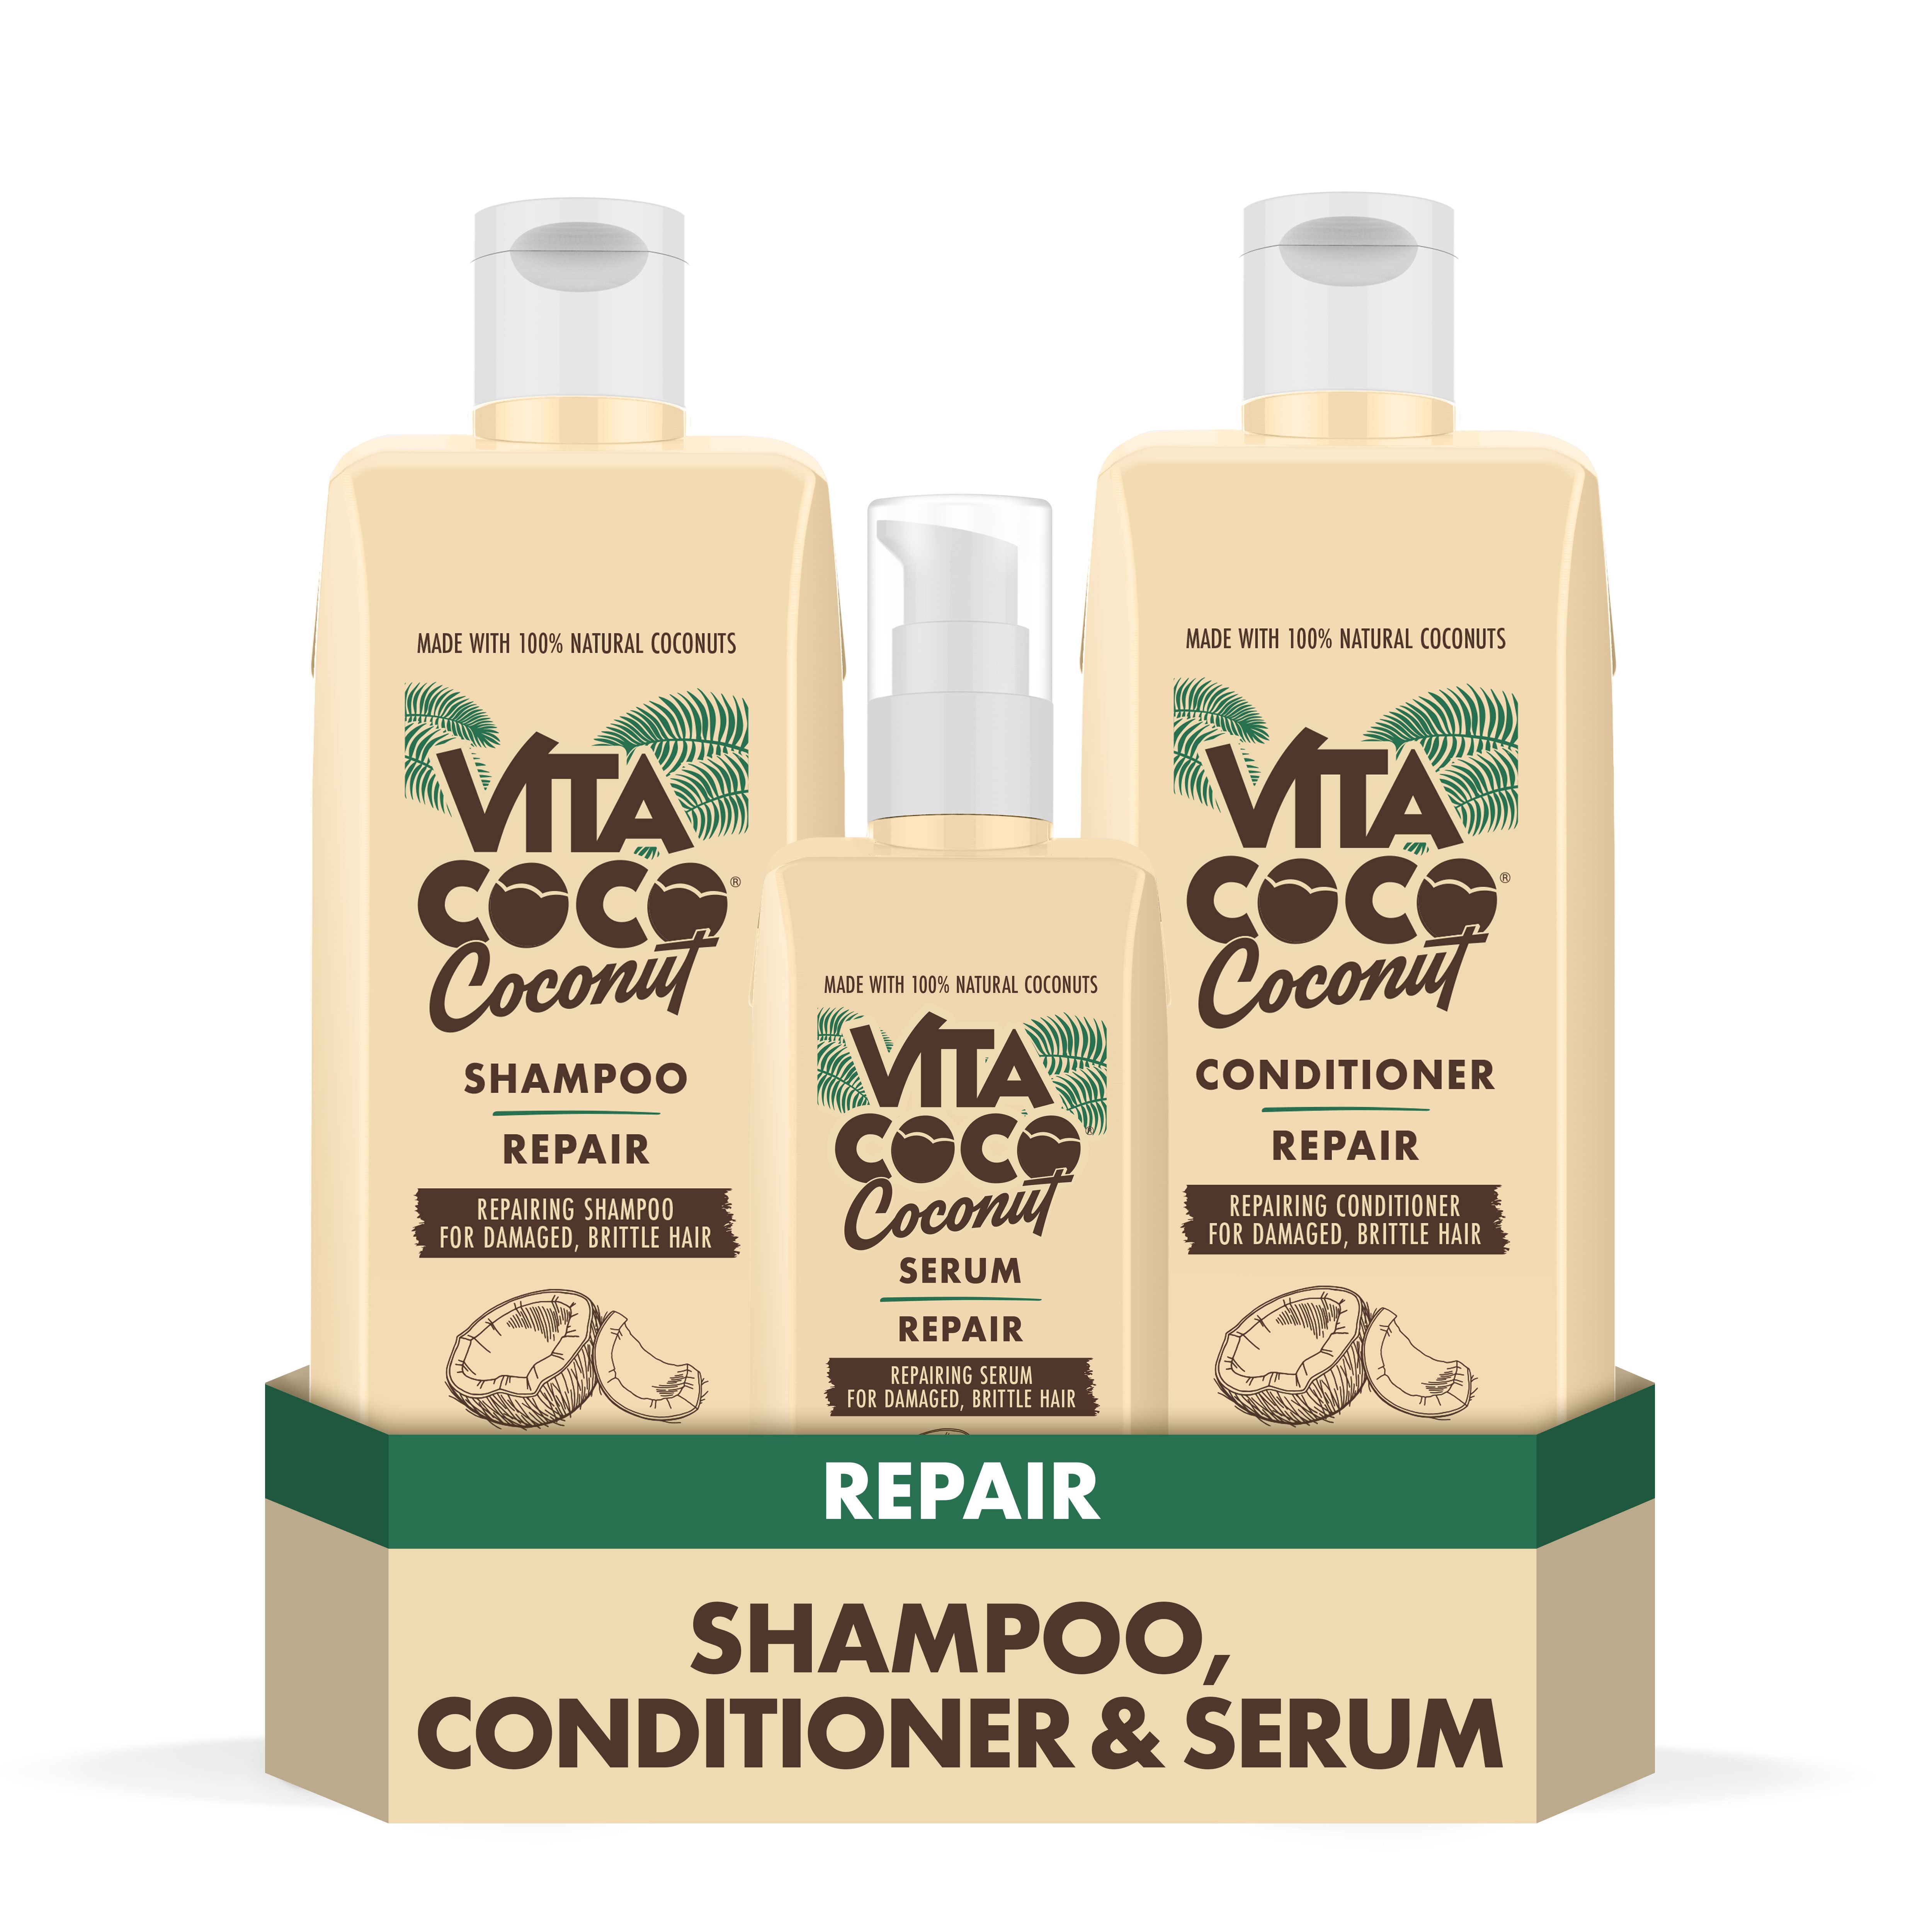 The Vita Coco Repair haircare range